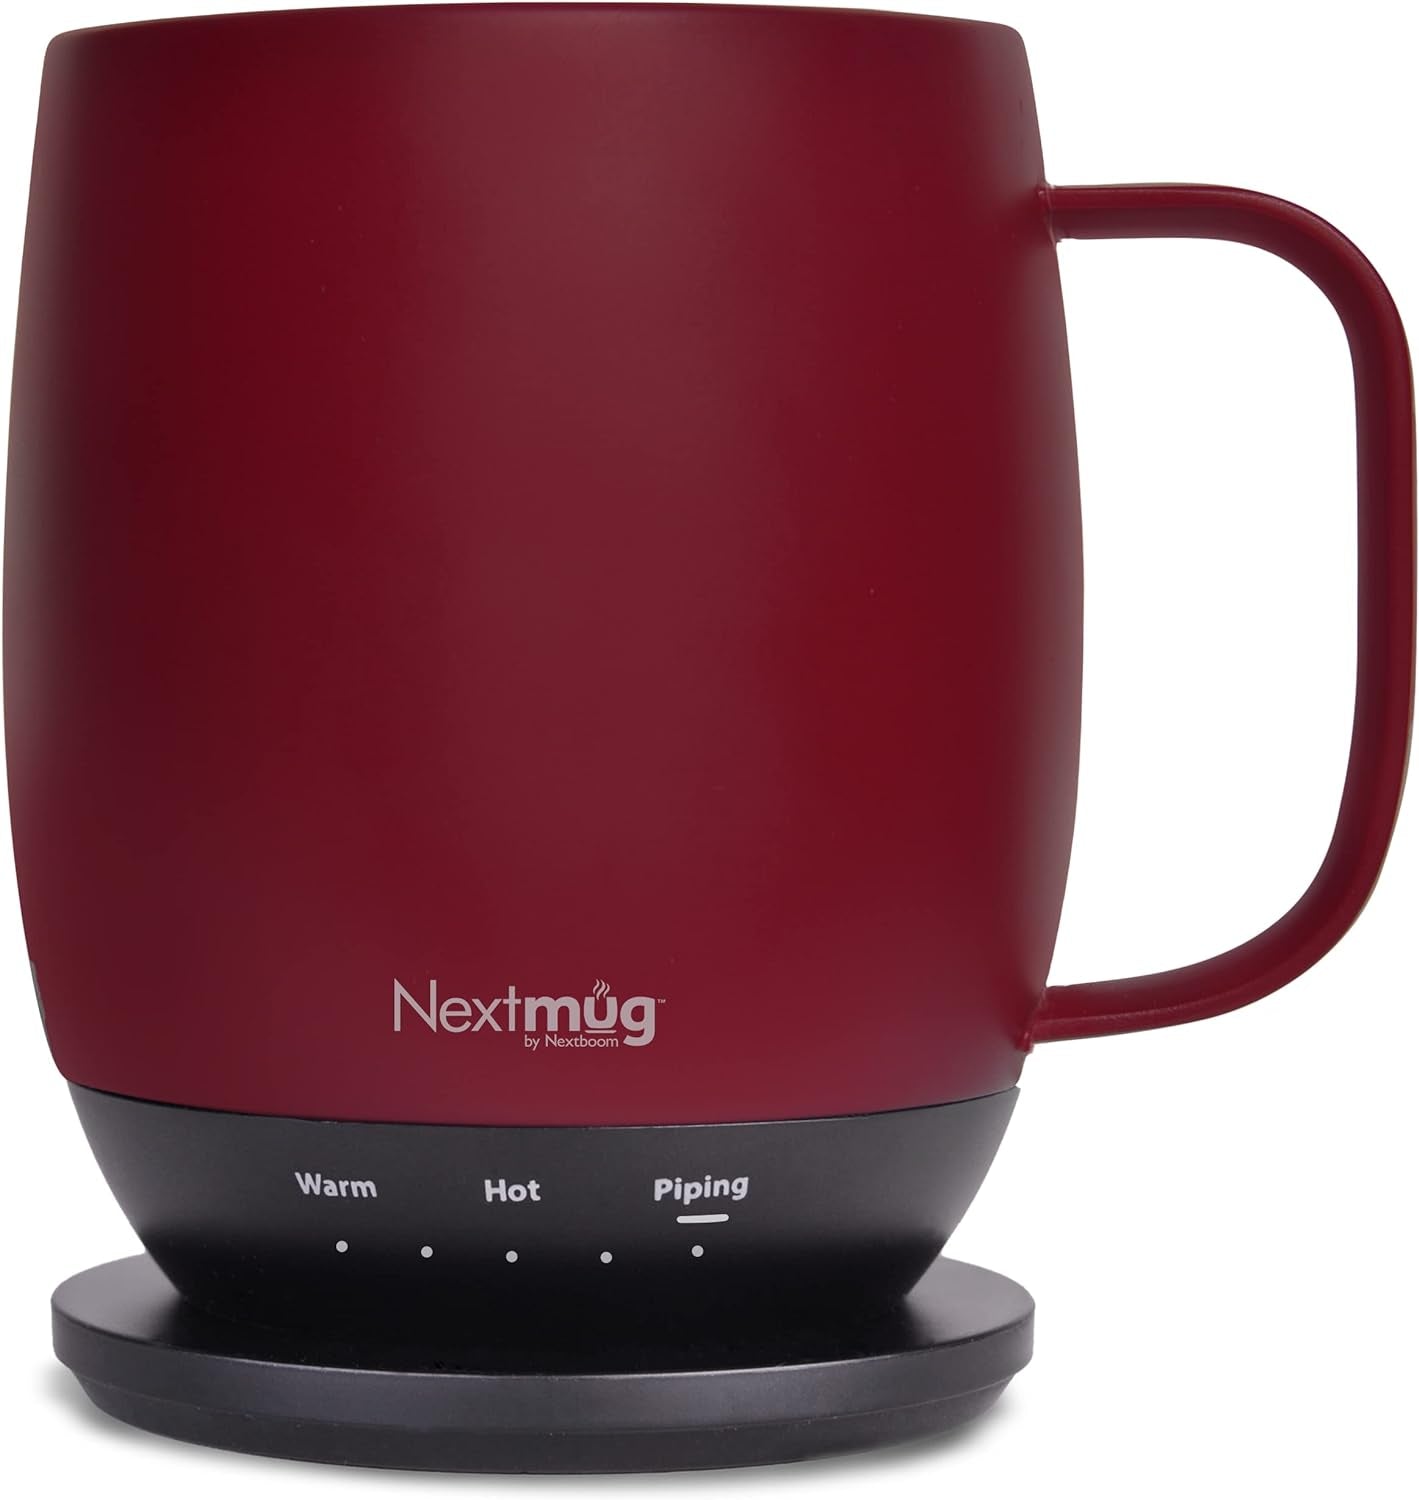 "Nextmug - Enjoy Hot Coffee Anytime, Anywhere! Temperature-Controlled, Self-Heating Mug (Black - 14 Oz.)"